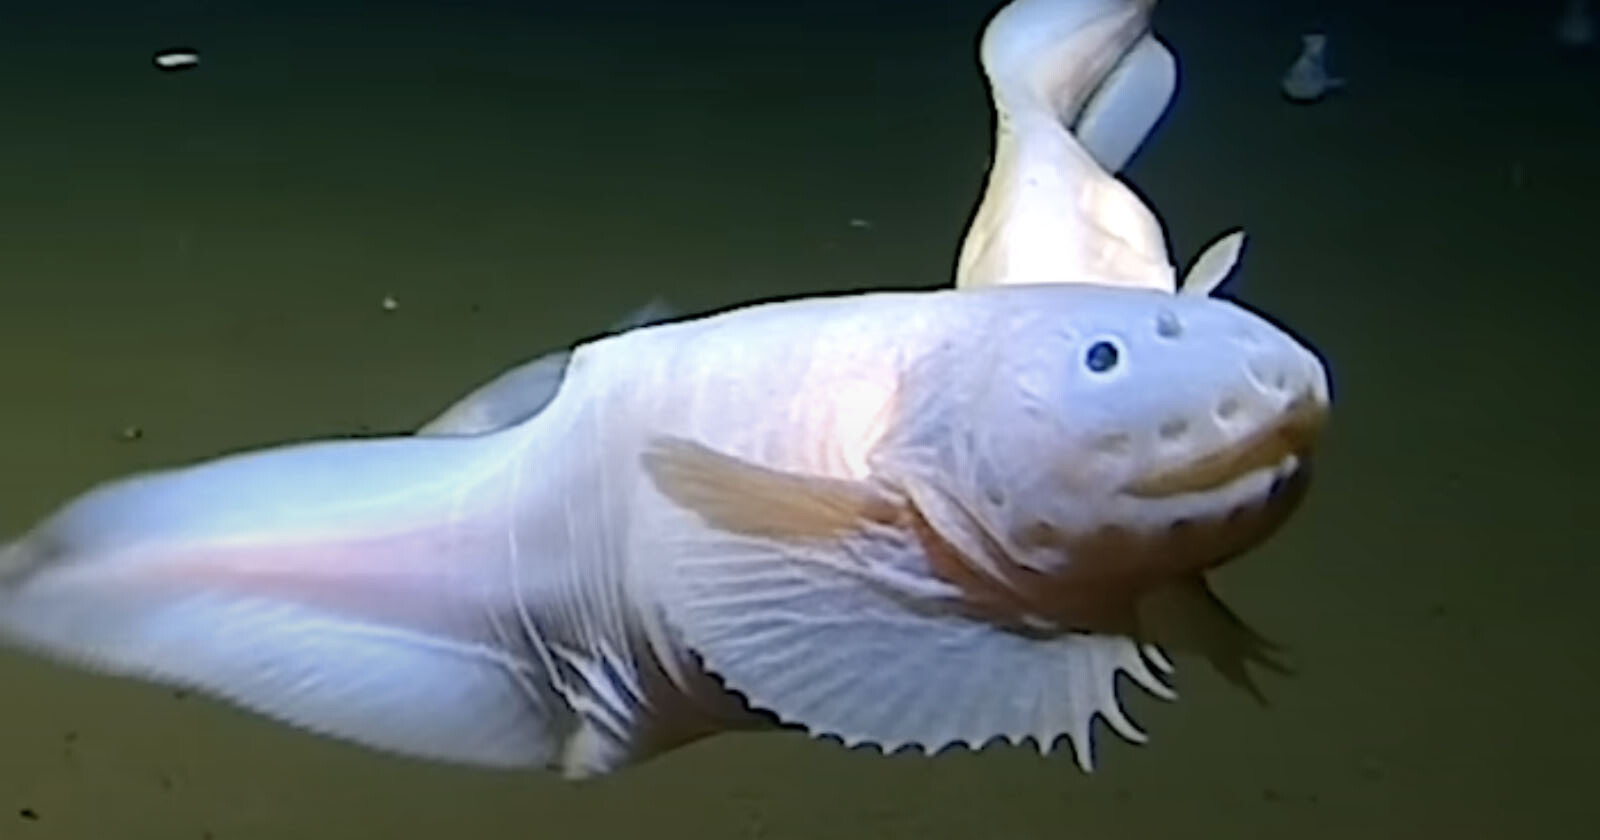  world deepest fish caught camera first 